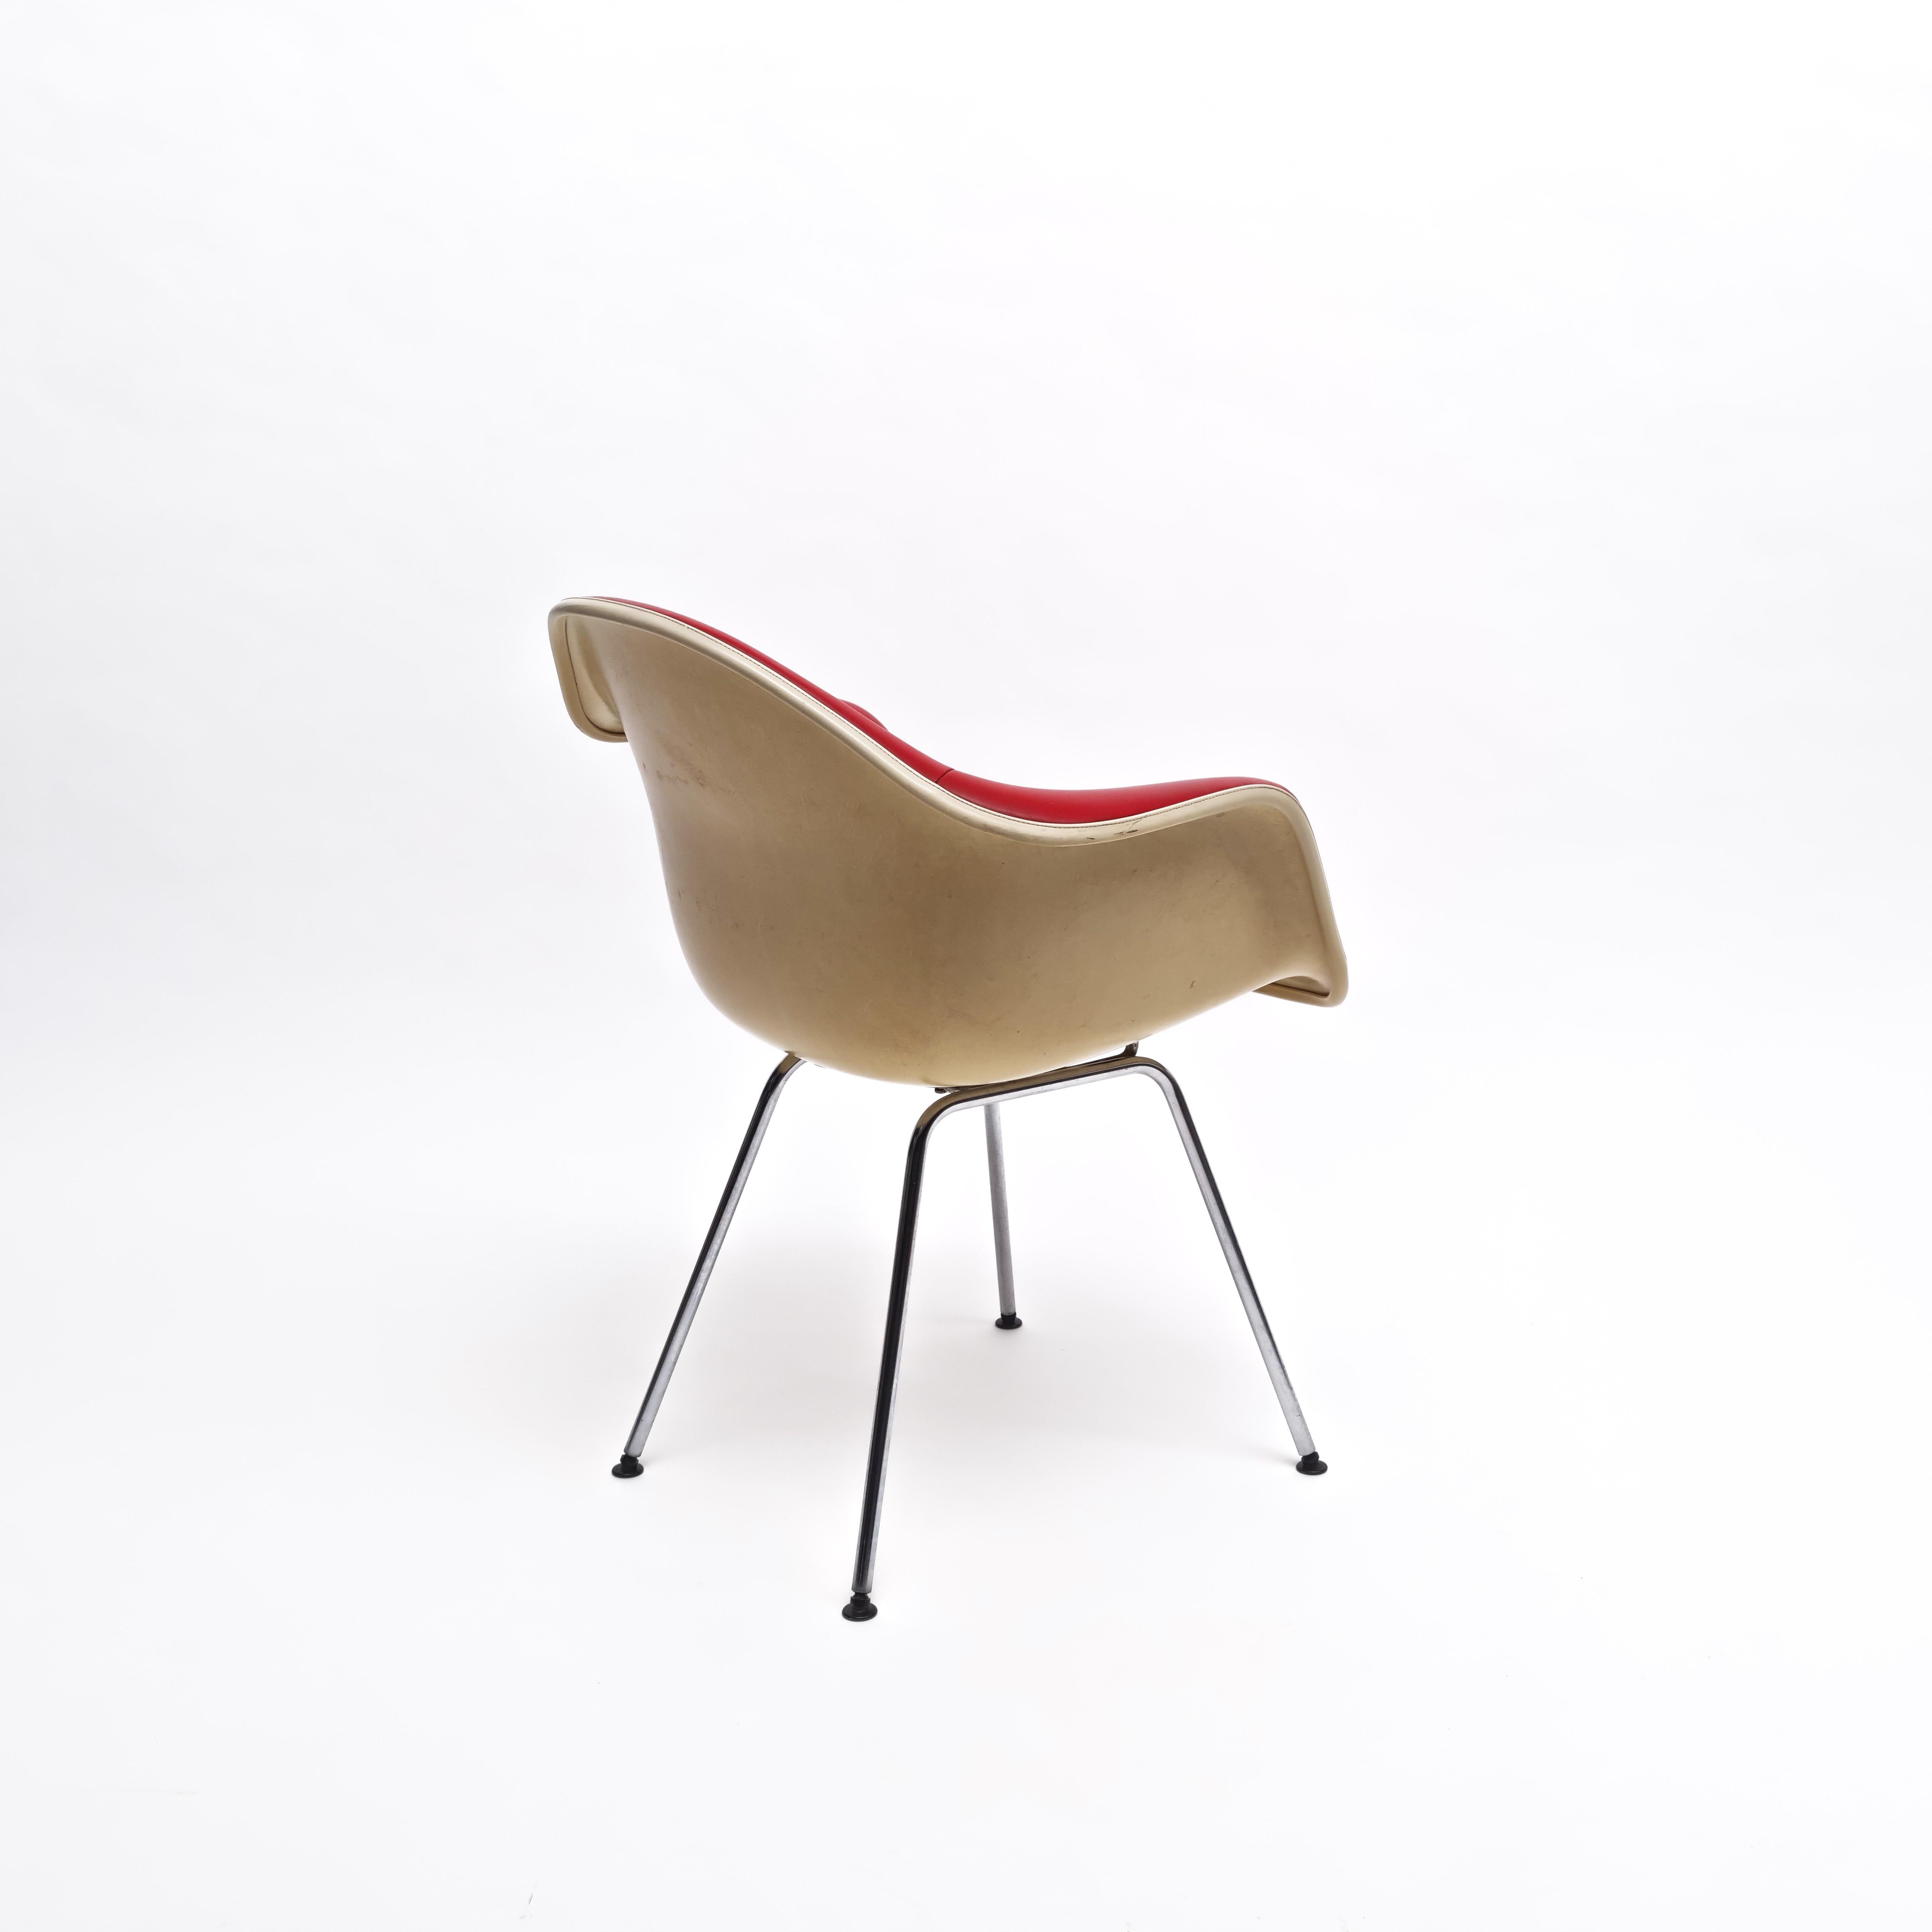 Sessel „Dax“ aus rotem Leder von Charles & Ray Eames, 1960er Jahre (20. Jahrhundert) im Angebot